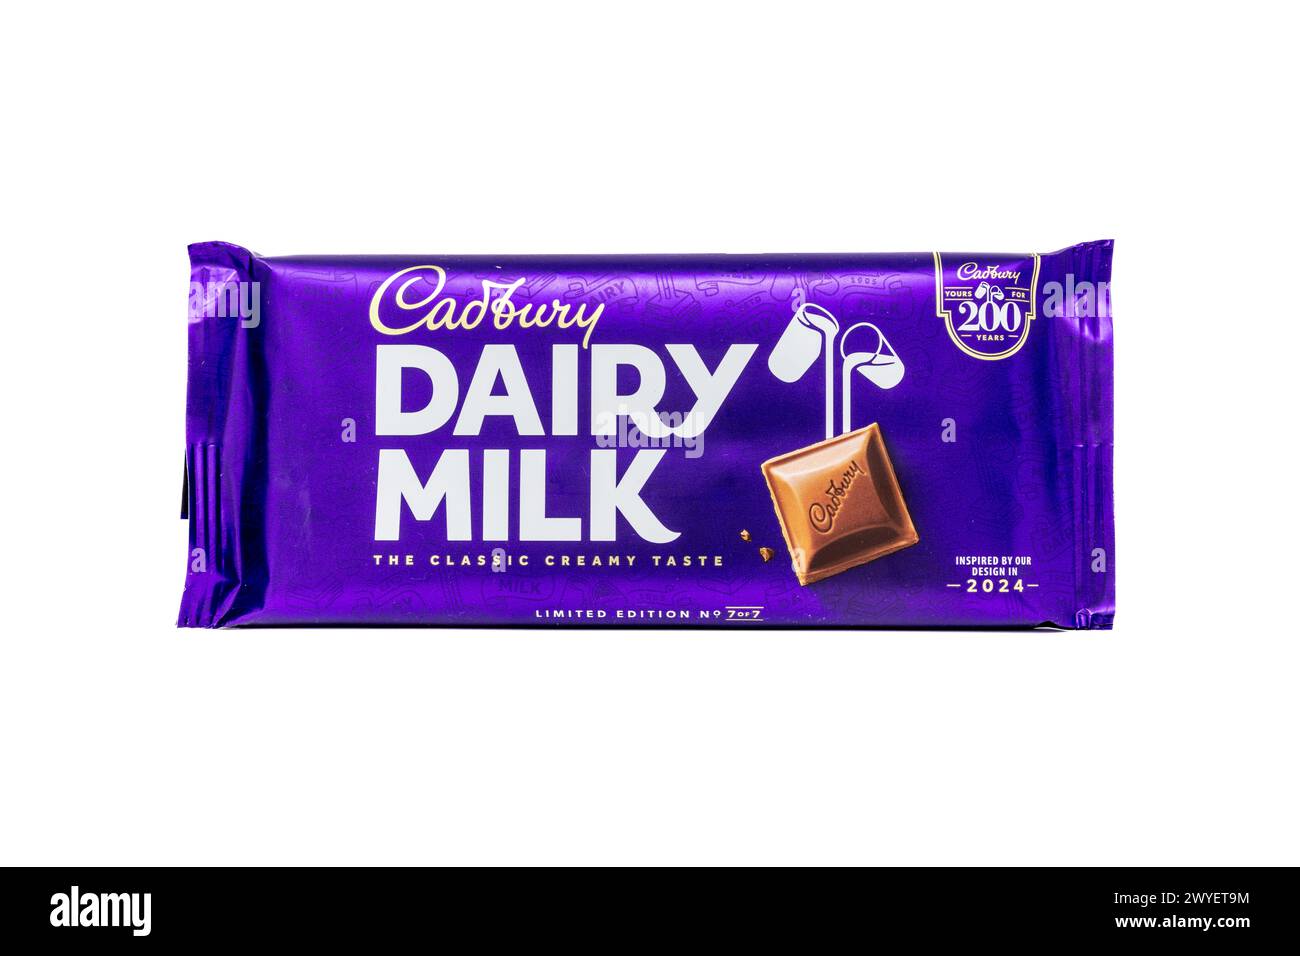 Cadbury Dairy Milk 2024 limited edition wrapper celebrating 200 years of Cadbury’s chocolate. Stock Photo